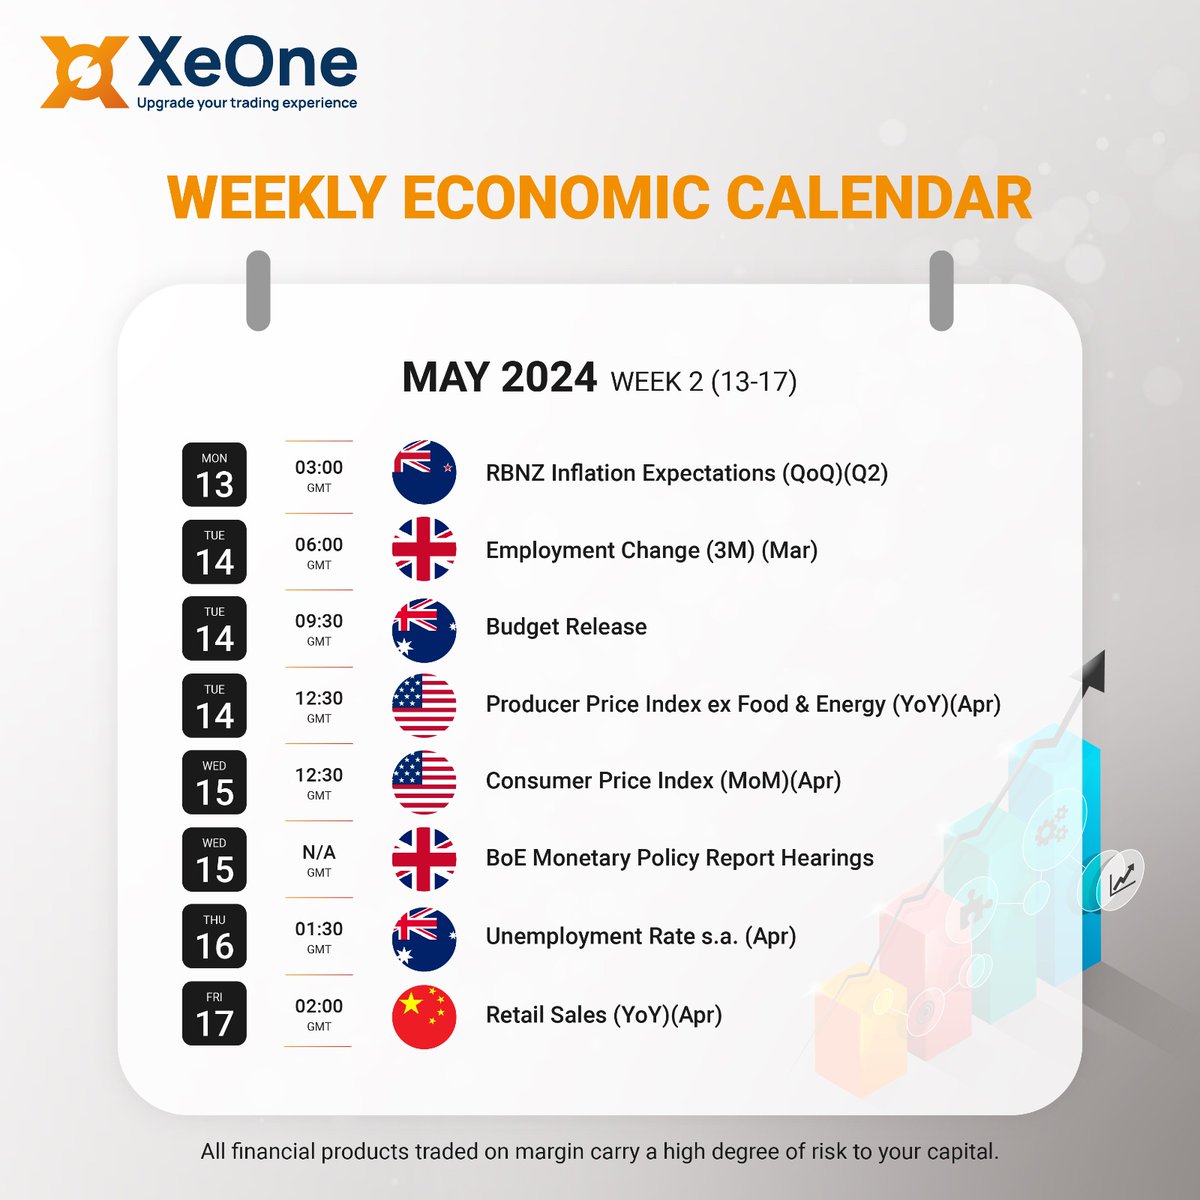 Important events for this week.

#XeOne #FinancialOutlook #MarketOutlook #EconomicCalendar #GlobalMarket